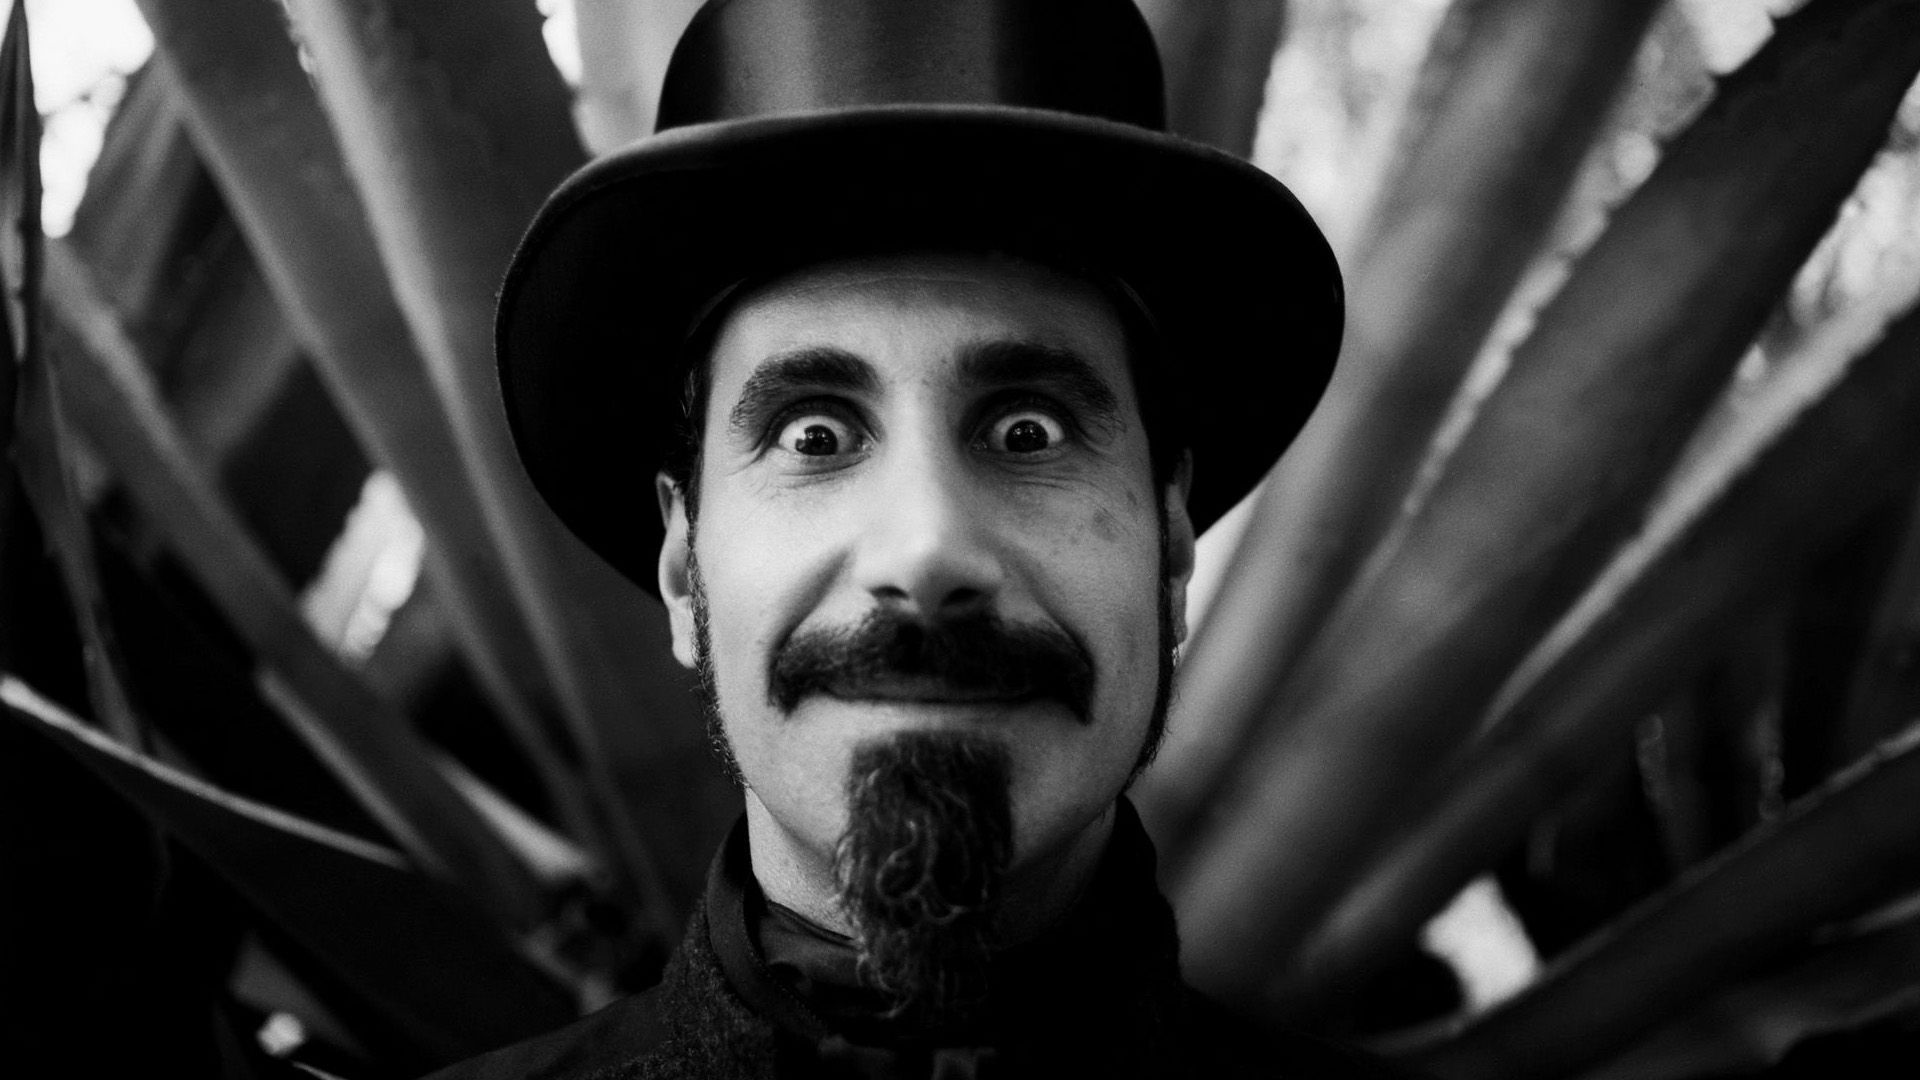 Serj Tankian System of a Down BW Face Hat singer heavy metal hard